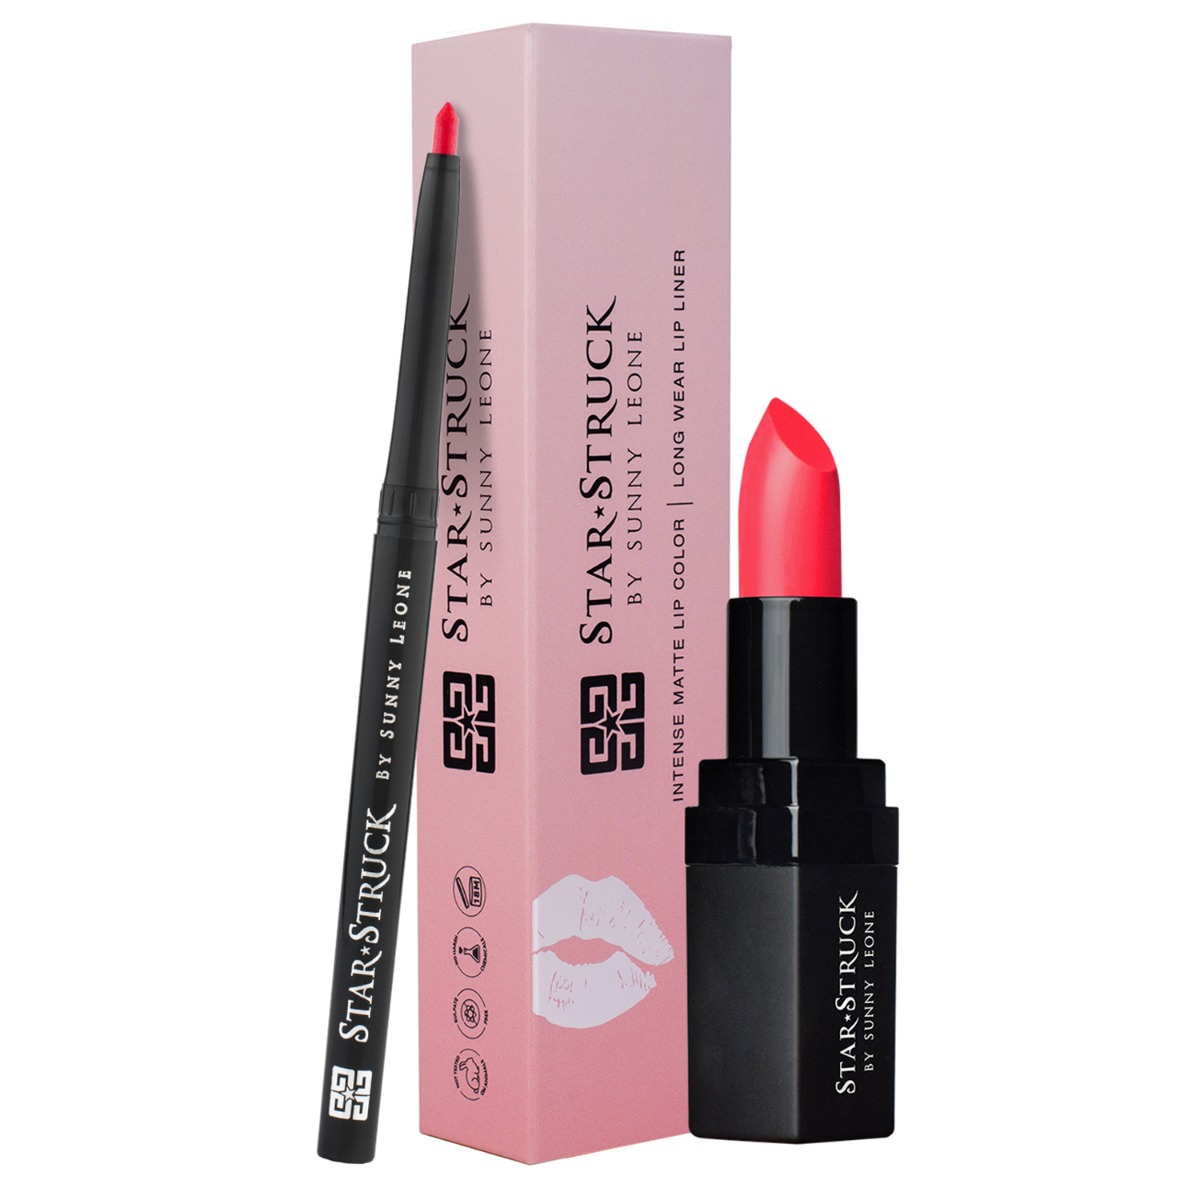 Star Struck by Sunny Leone Wild Cherry Lip Kit - Lipstick, 4.45 gm + Lip Liner, 0.25gm Combo